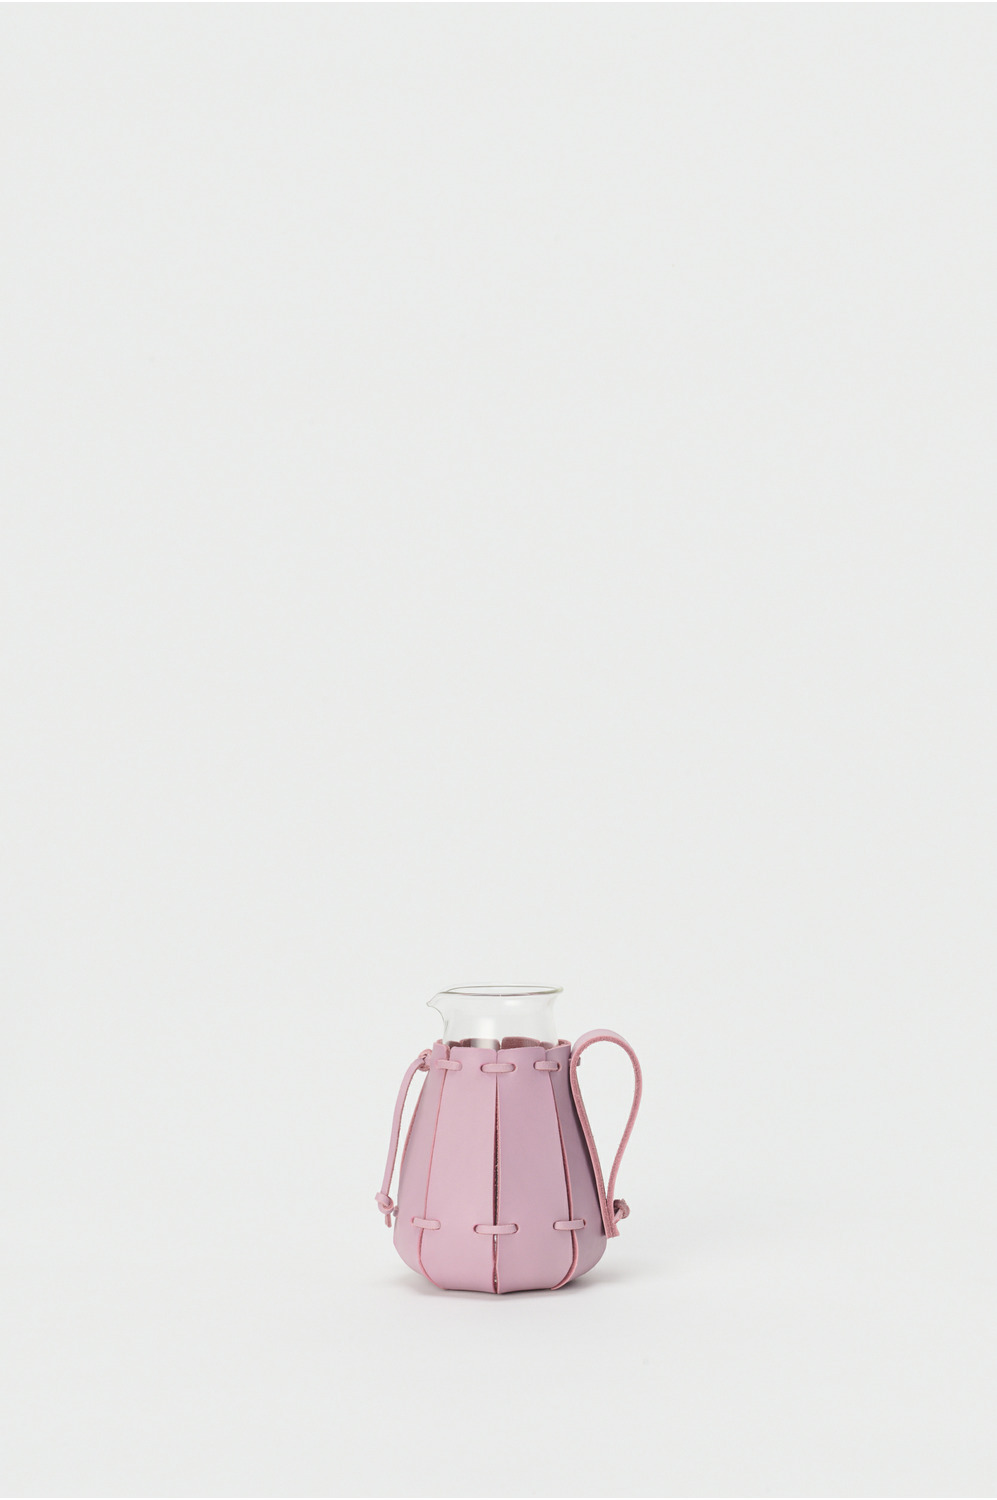 Conical beaker/500ml 詳細画像 lavender 1